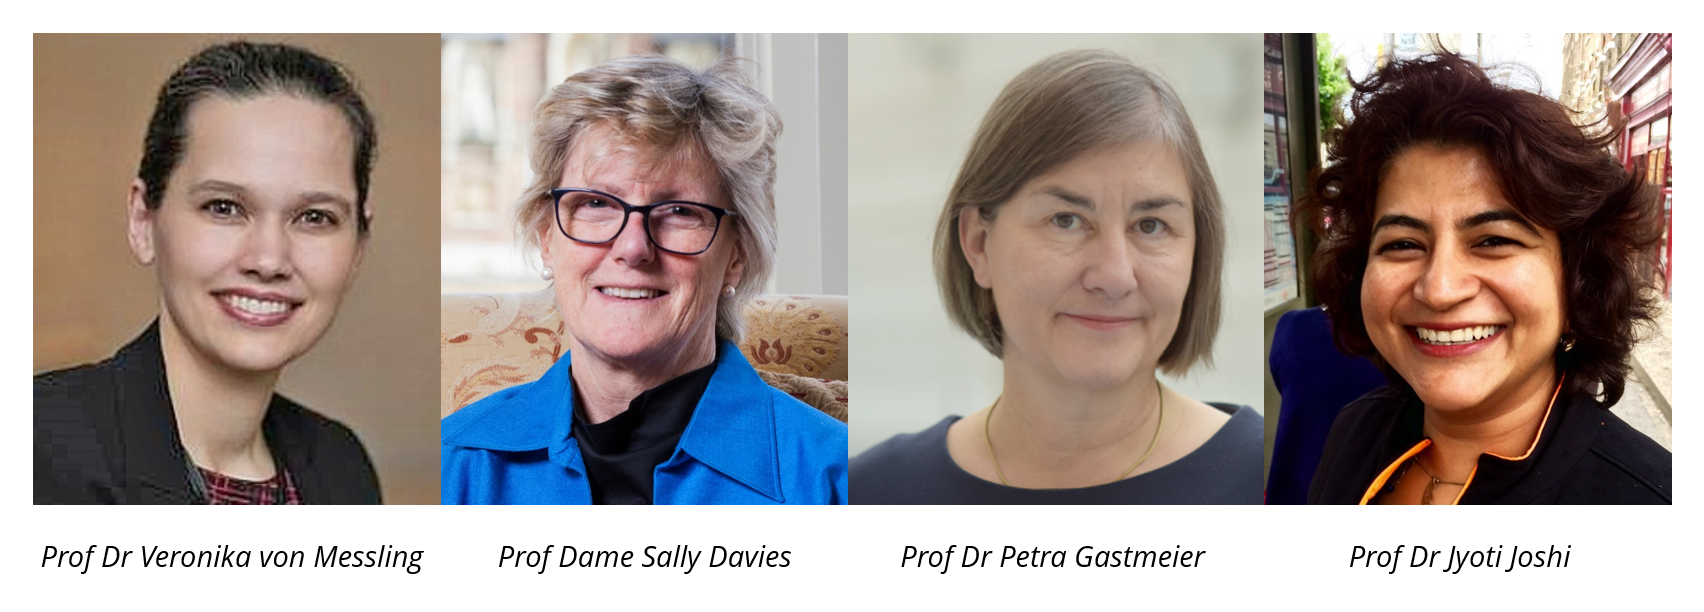 Prof Dr Veronika von Messling, Prof Dame Sally Davies, Prof Dr Petra Gastmeier and Prof Dr Jyoti Joshi